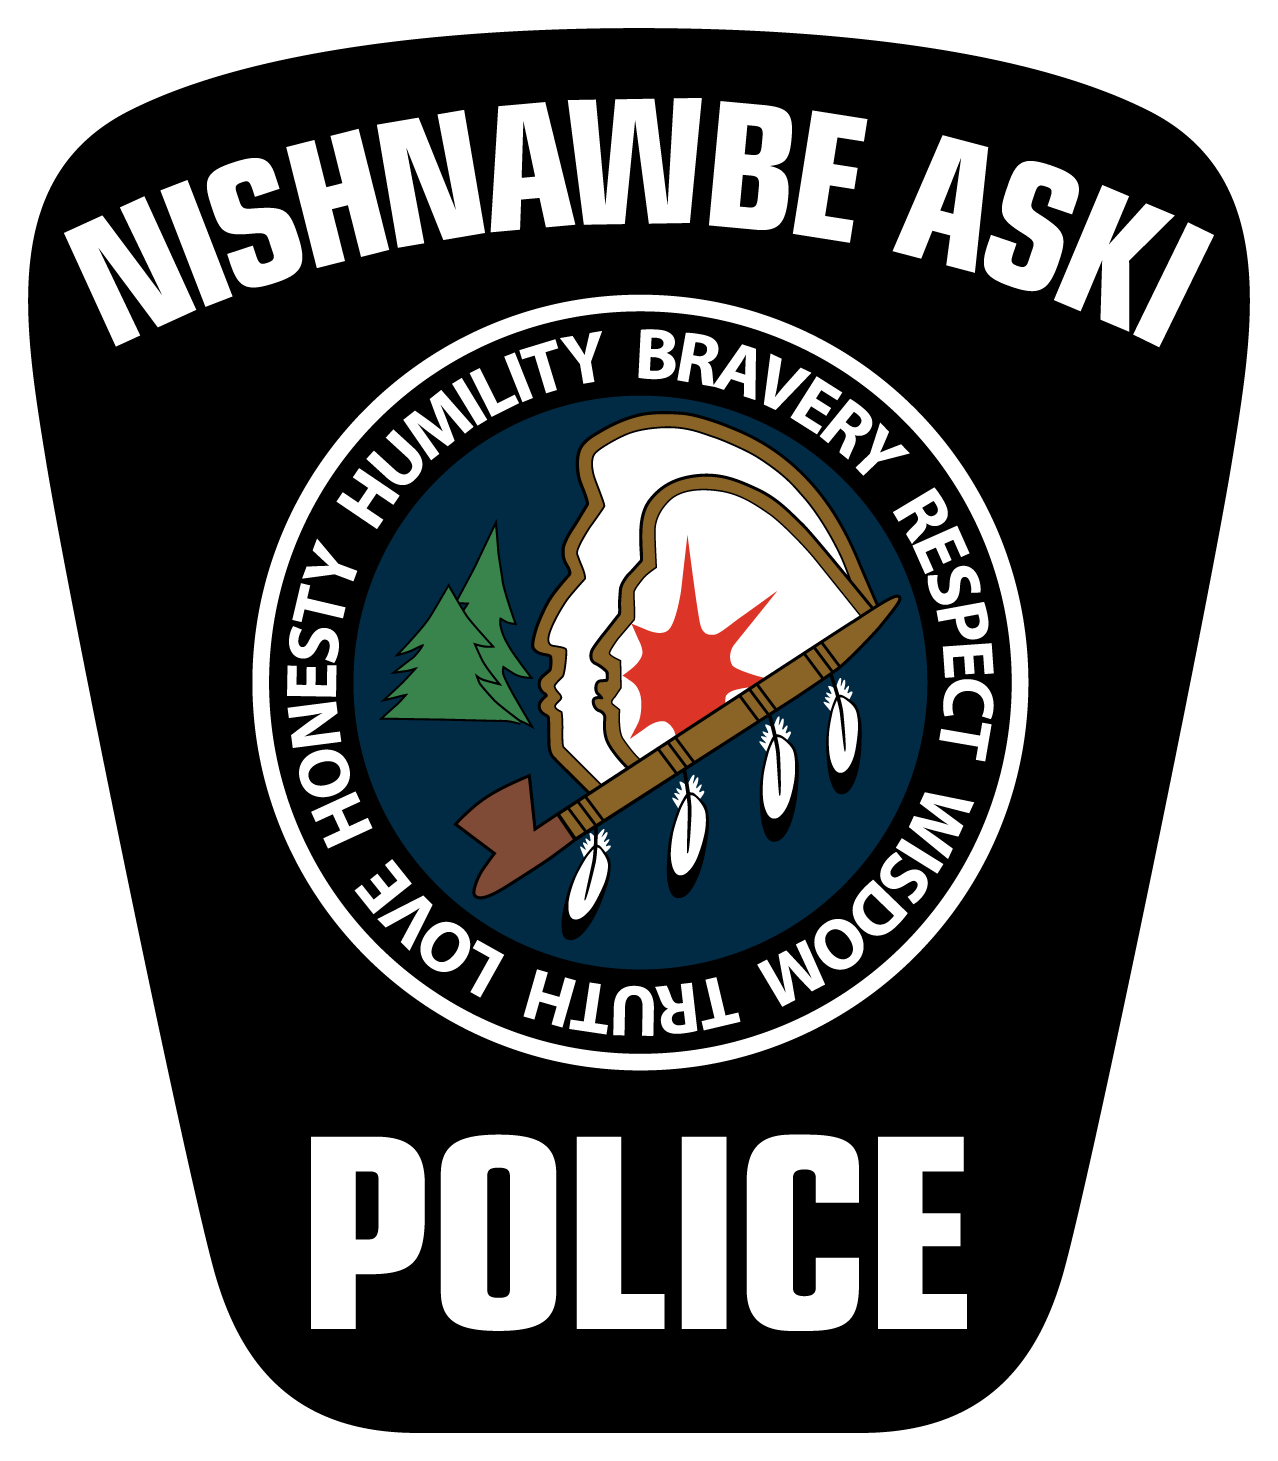 Nishnawbe aski police